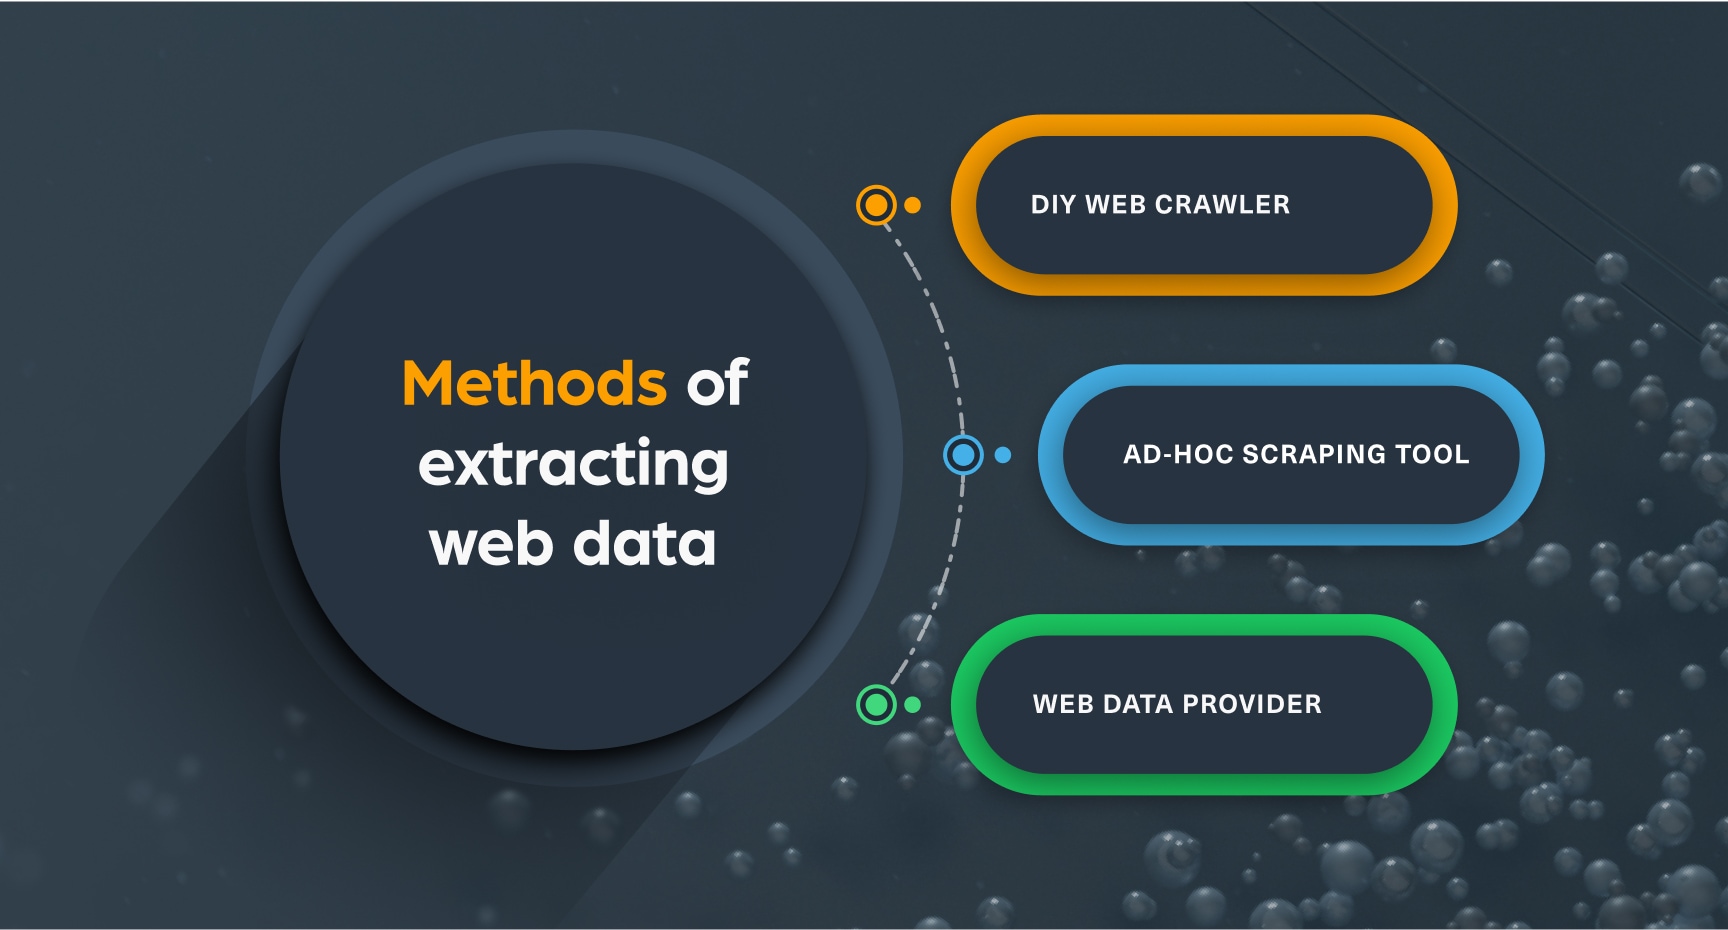 Methods of extracting web data: DIY web crawler, ad-hoc scraping tool, and web data provider